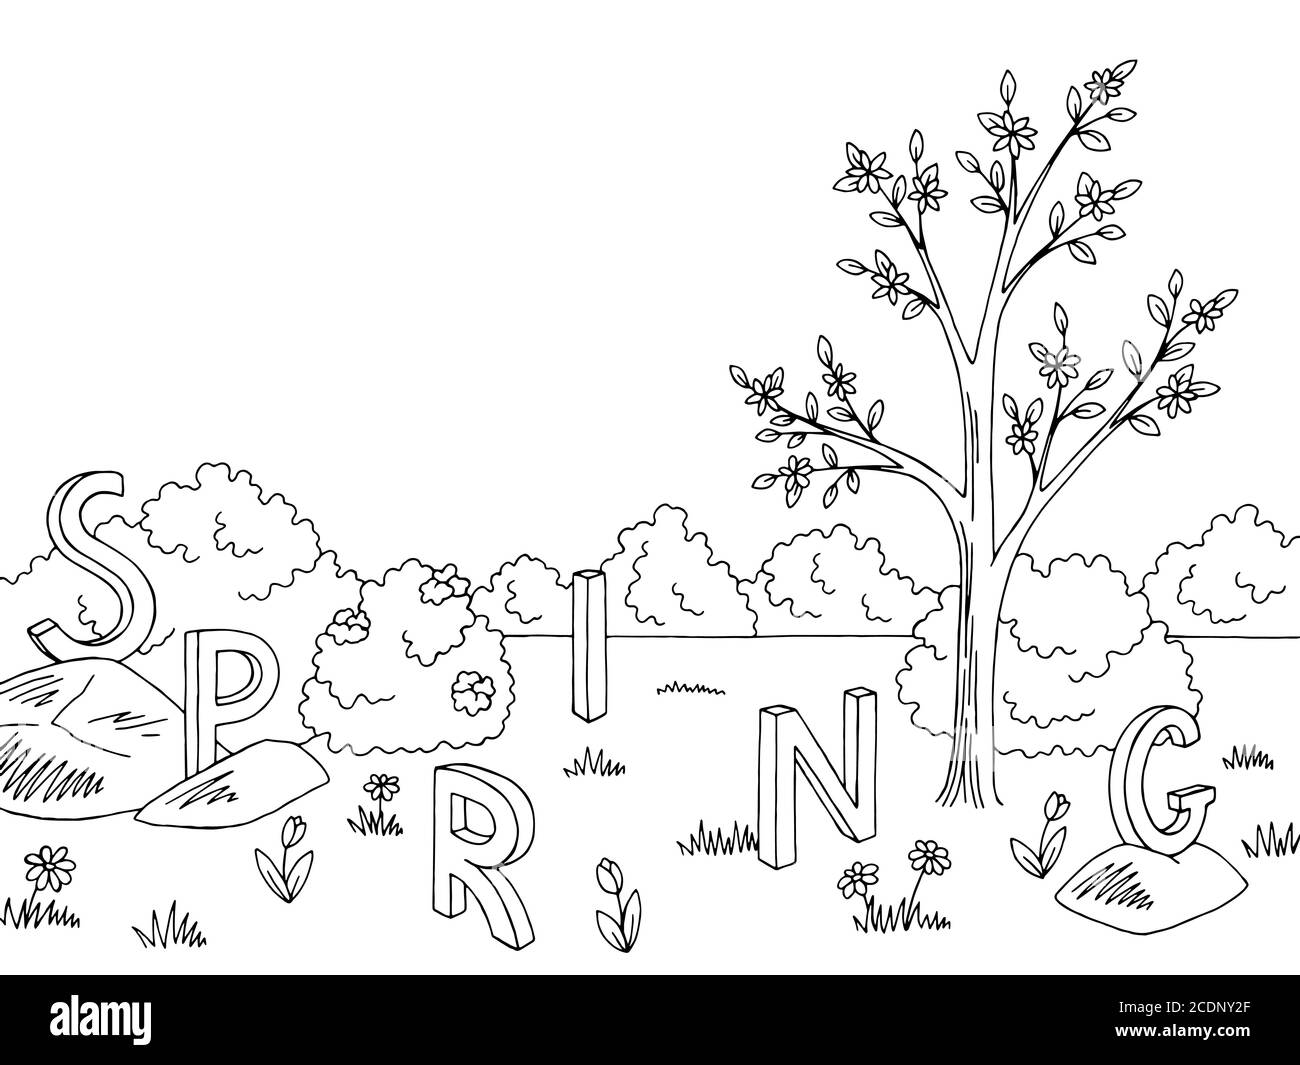 Frühling Grafik schwarz weiß Landschaft Baum Skizze Illustration Vektor Stock Vektor